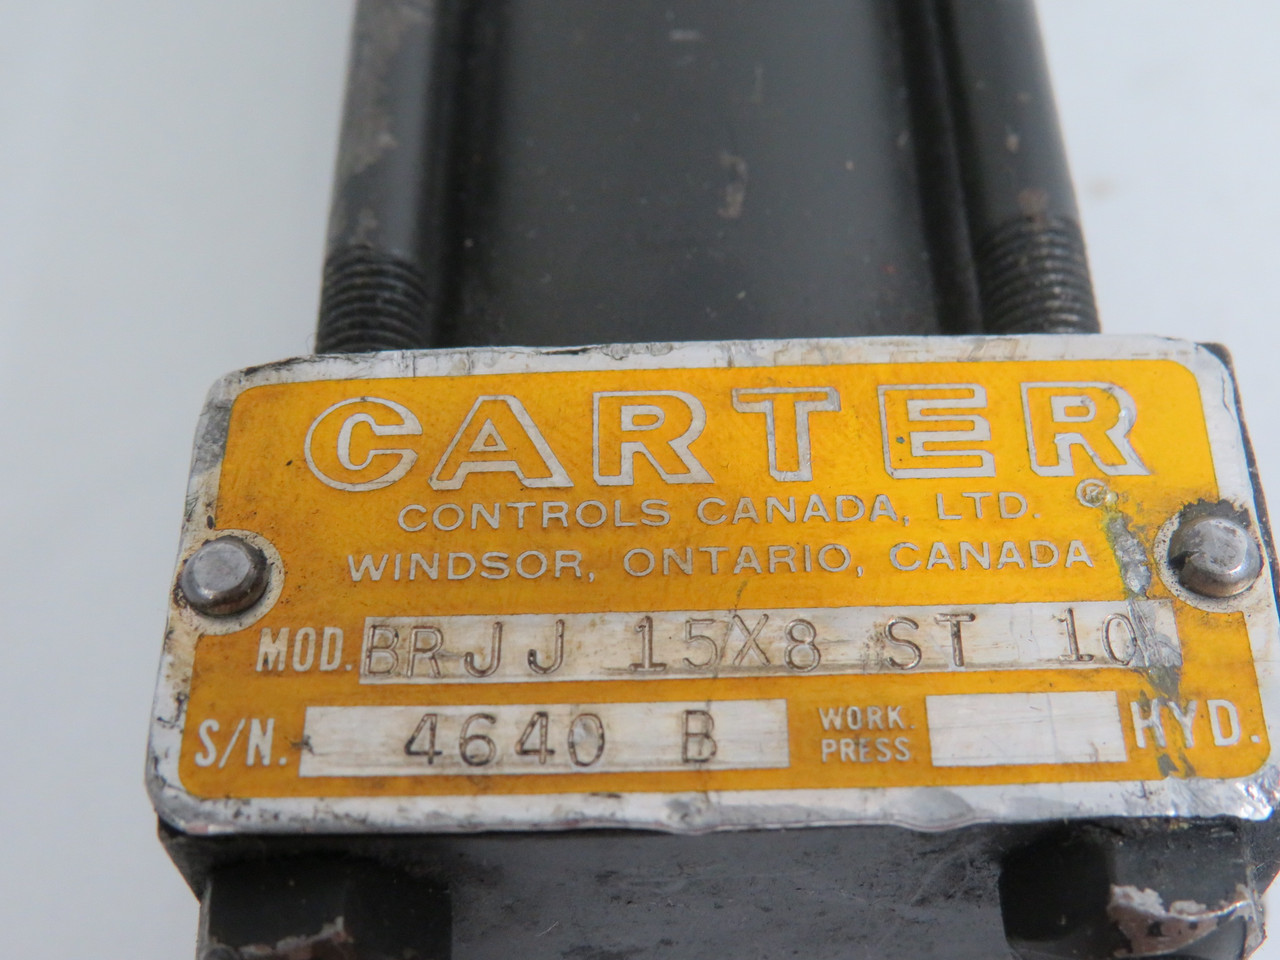 Carter BR-JJ-15X8-ST10 Pneumatic Cylinder 1.5" Bore 8" Stroke USED